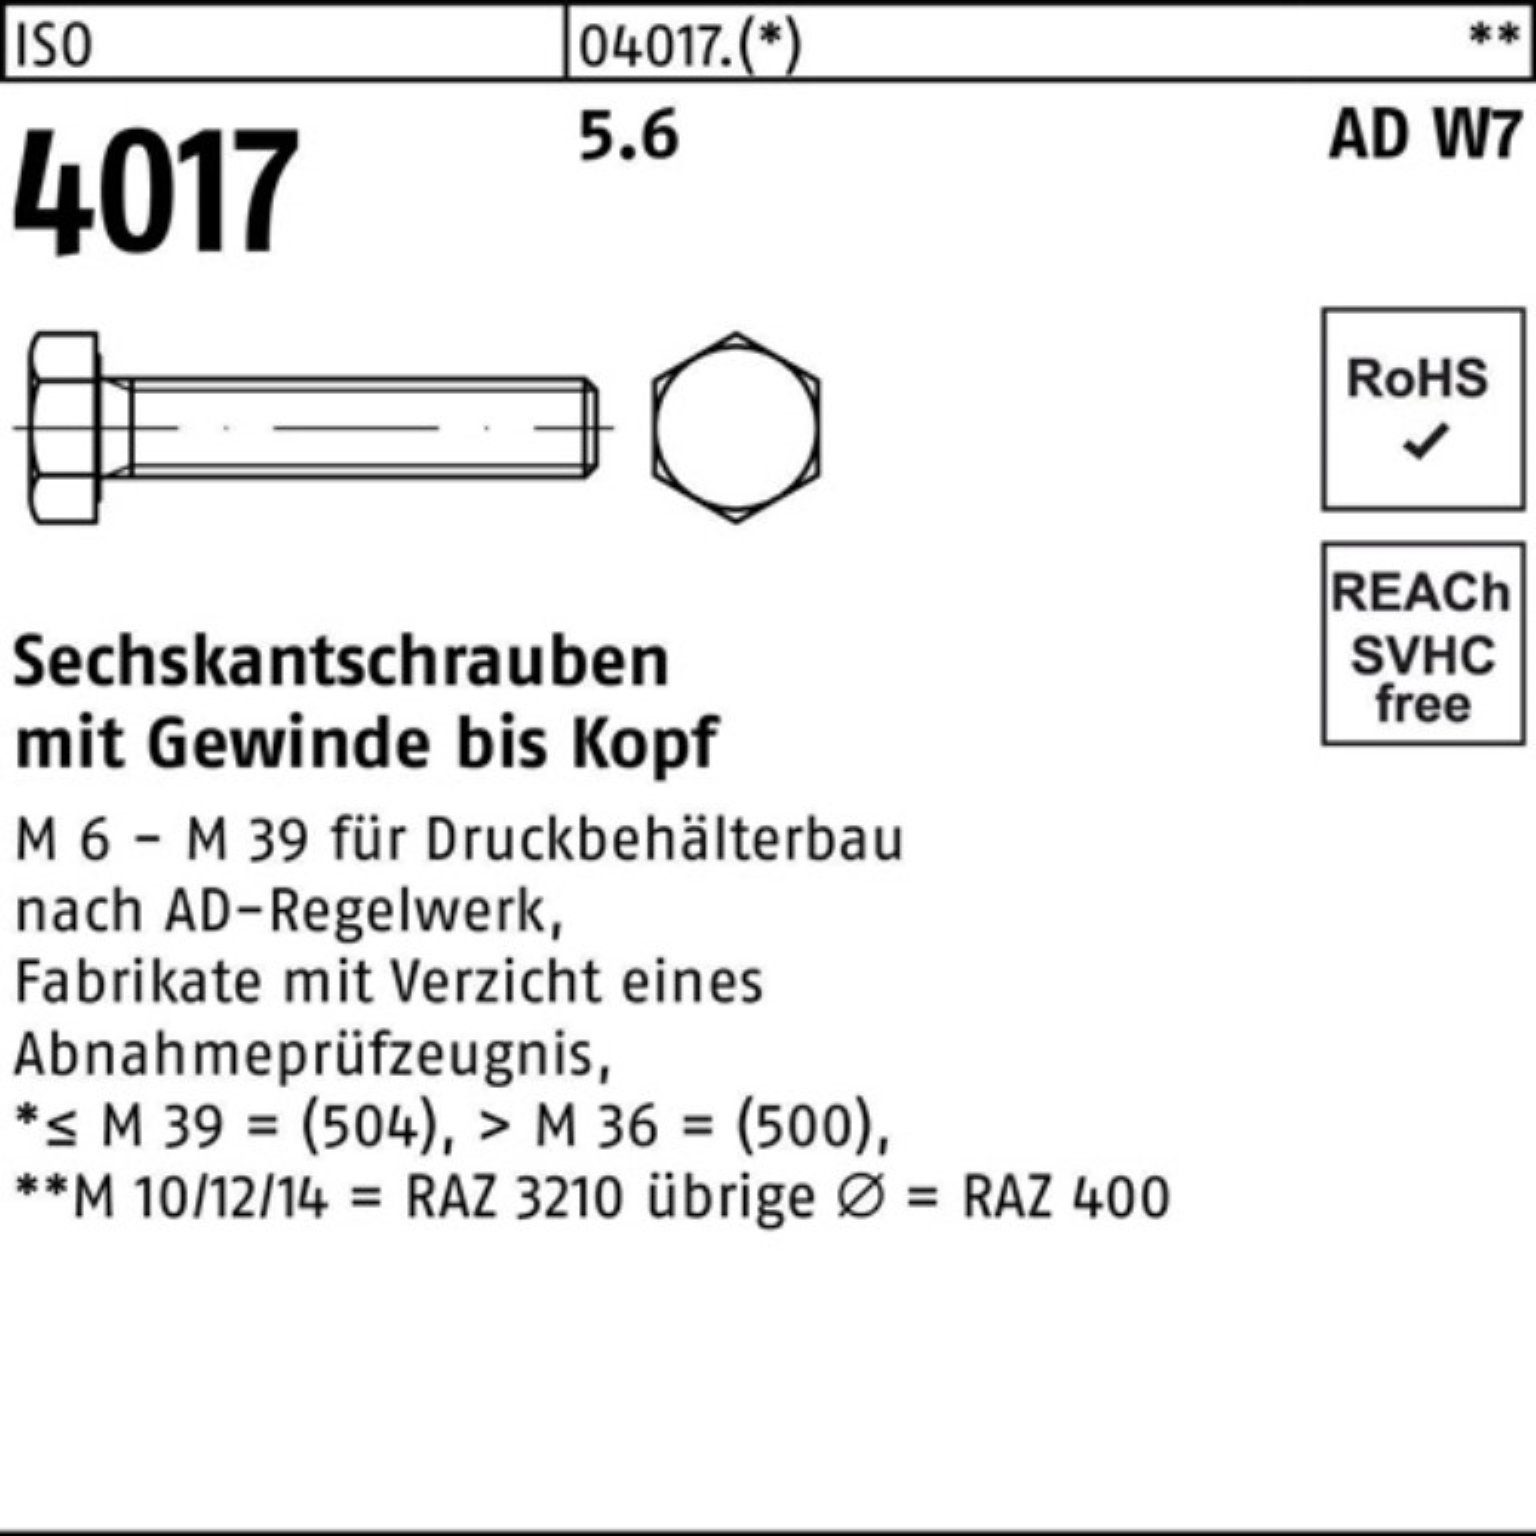 Bufab Sechskantschraube 100er Pack Sechskantschraube ISO 4017 VG M12x 50 5.6 AD W7 100 Stück | Schrauben